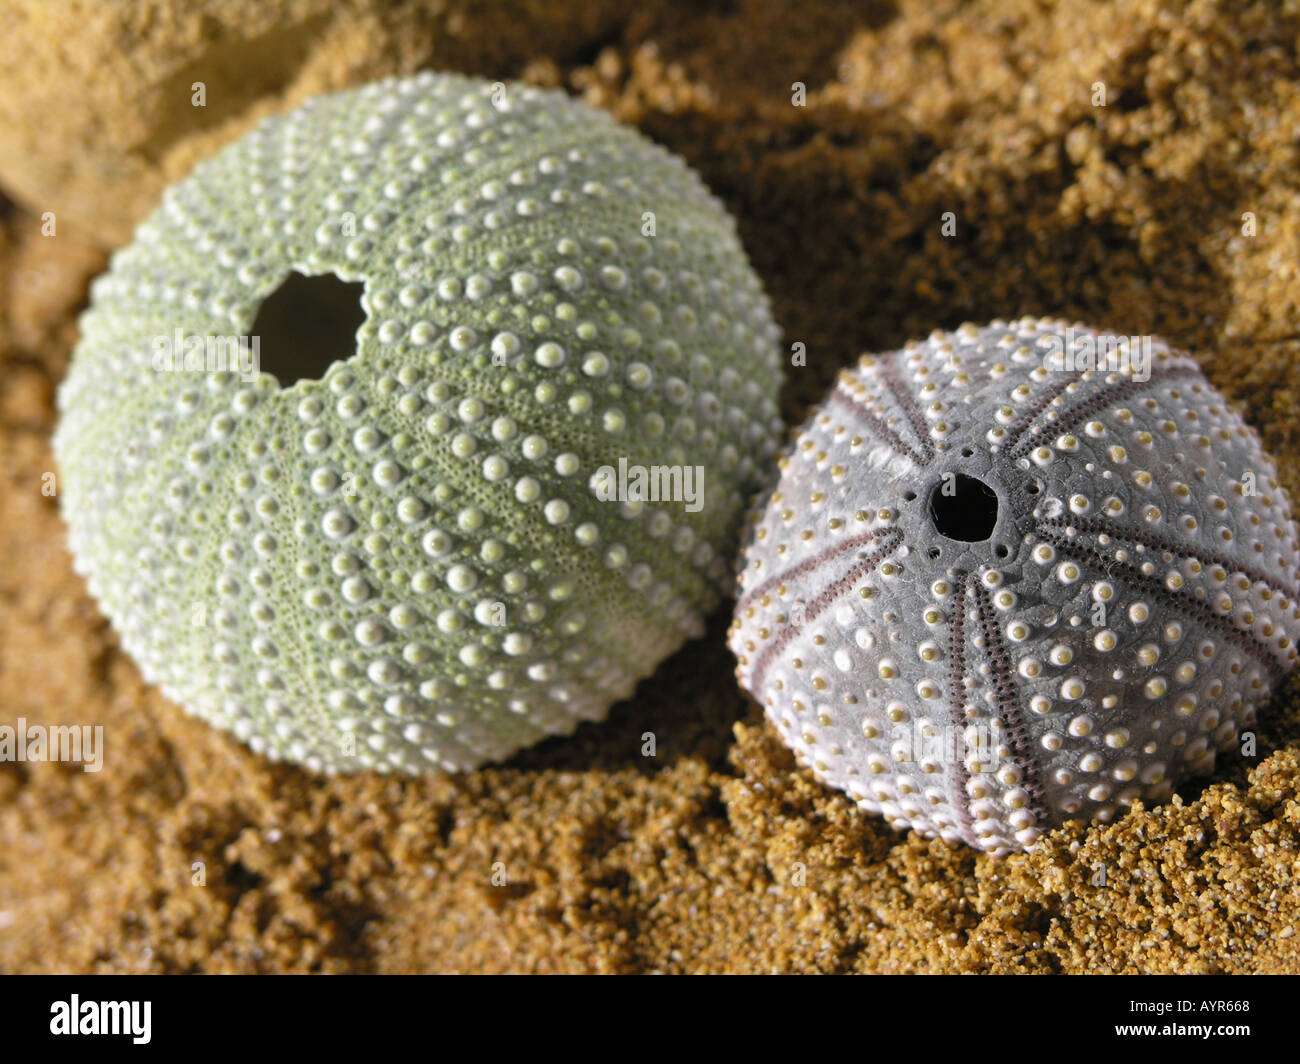 2 Echinoidea sea urchins Stock Photo